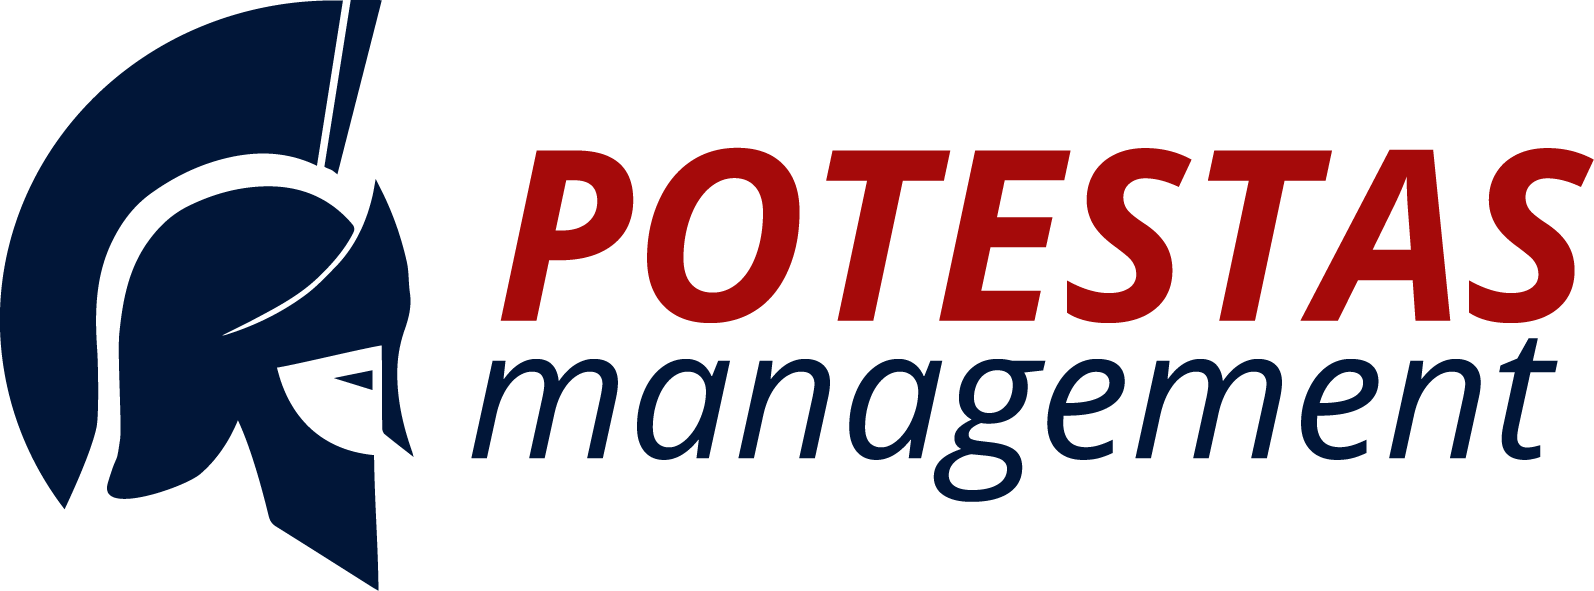 Potestas Management Ltd - Digital Transition